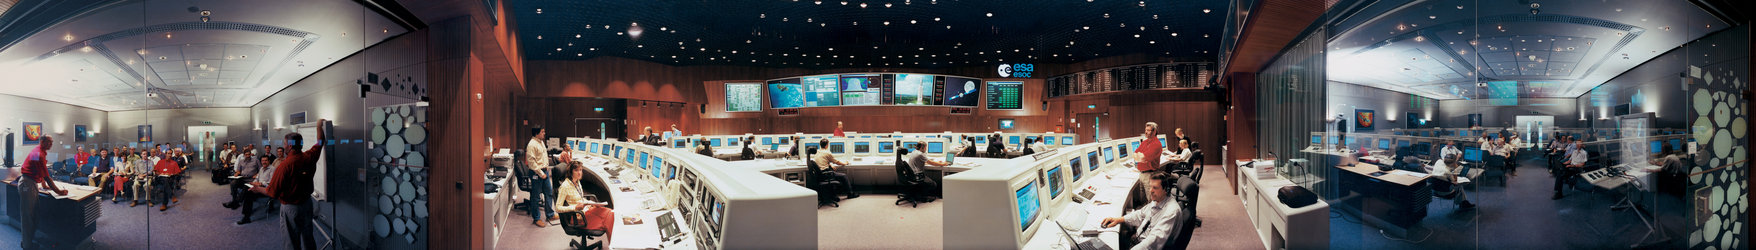 ESOC Control Room